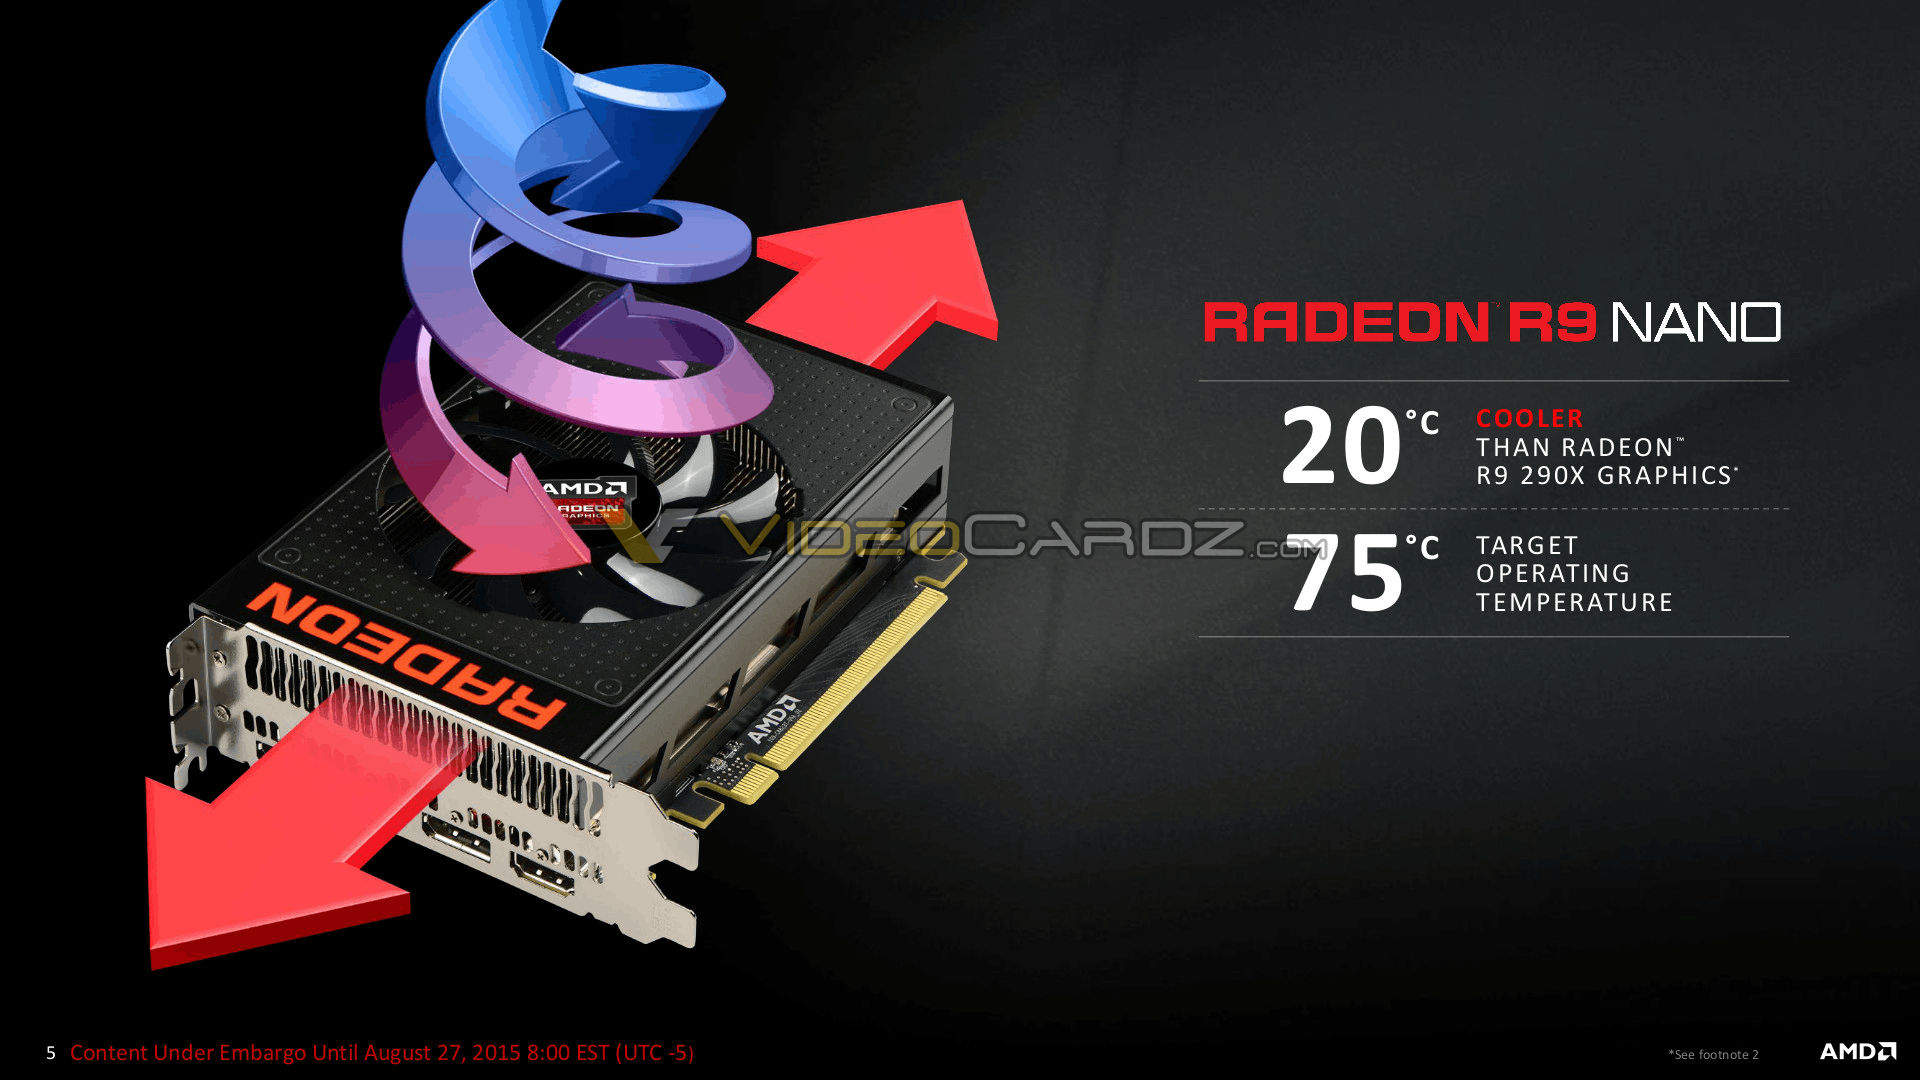 AMD-Radeon-R9-Nano-Presentation-5.jpg